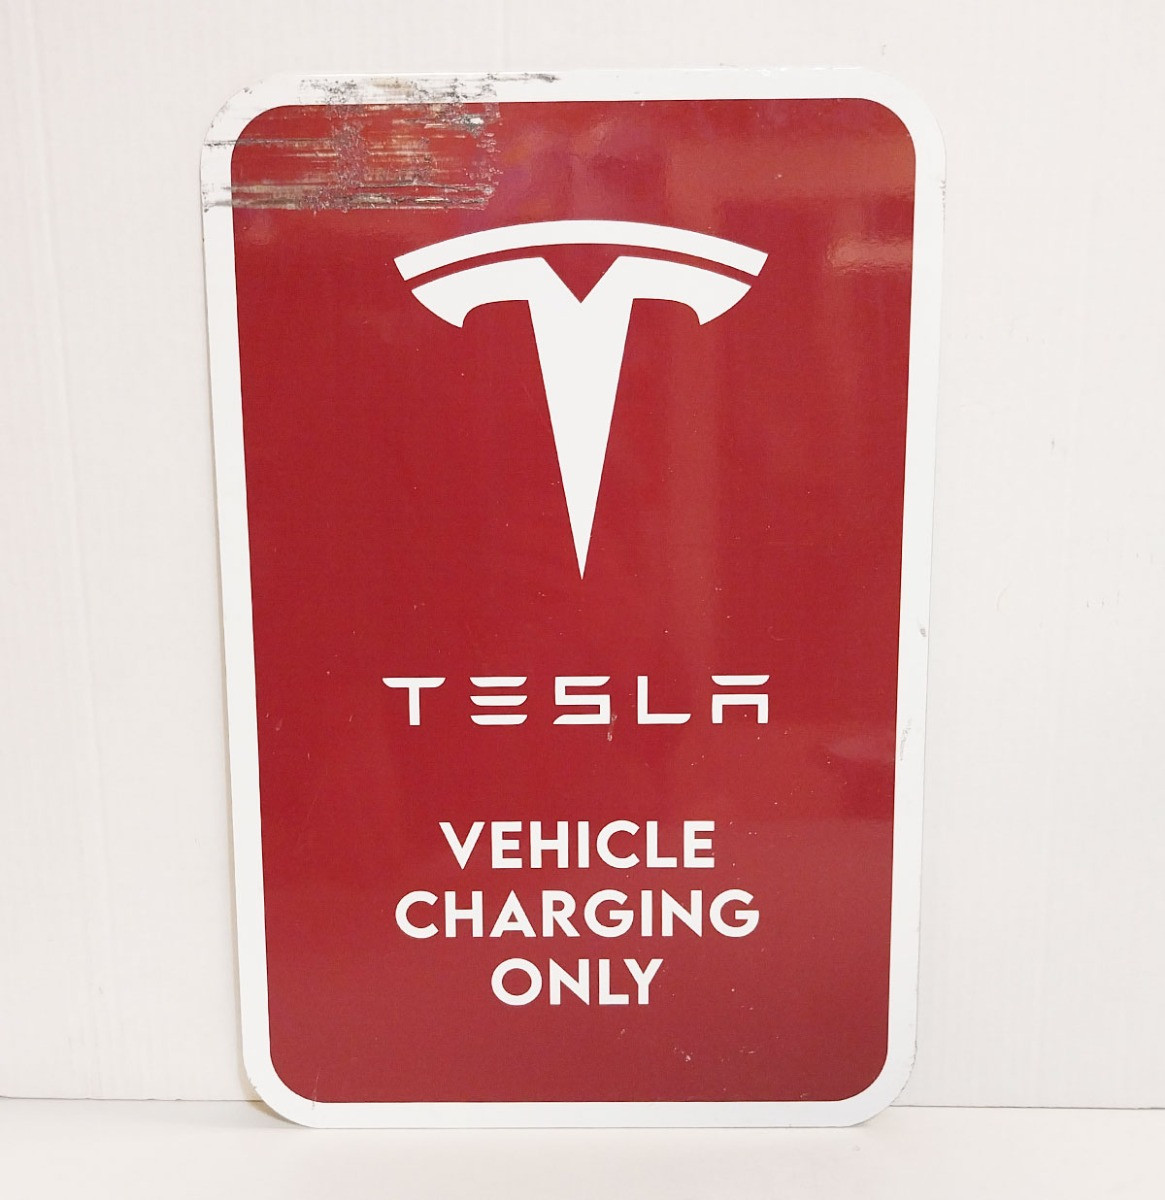 Tesla Charging - Origineel Amerikaans Verkeersbord - 46 x 30cm